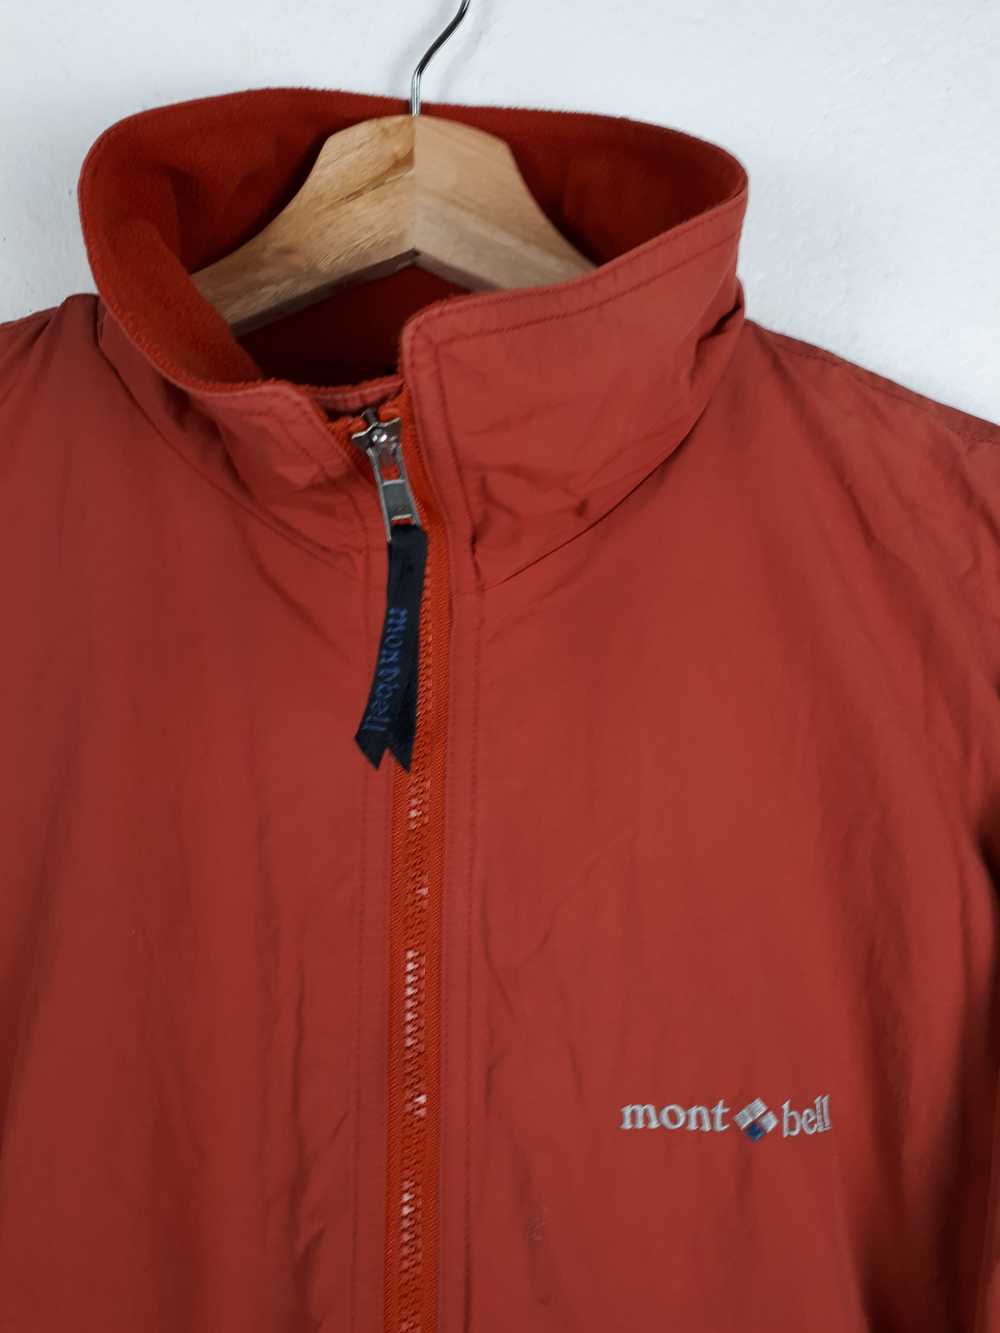 Montbell - Mont Bell Windbreaker Jacket - image 2